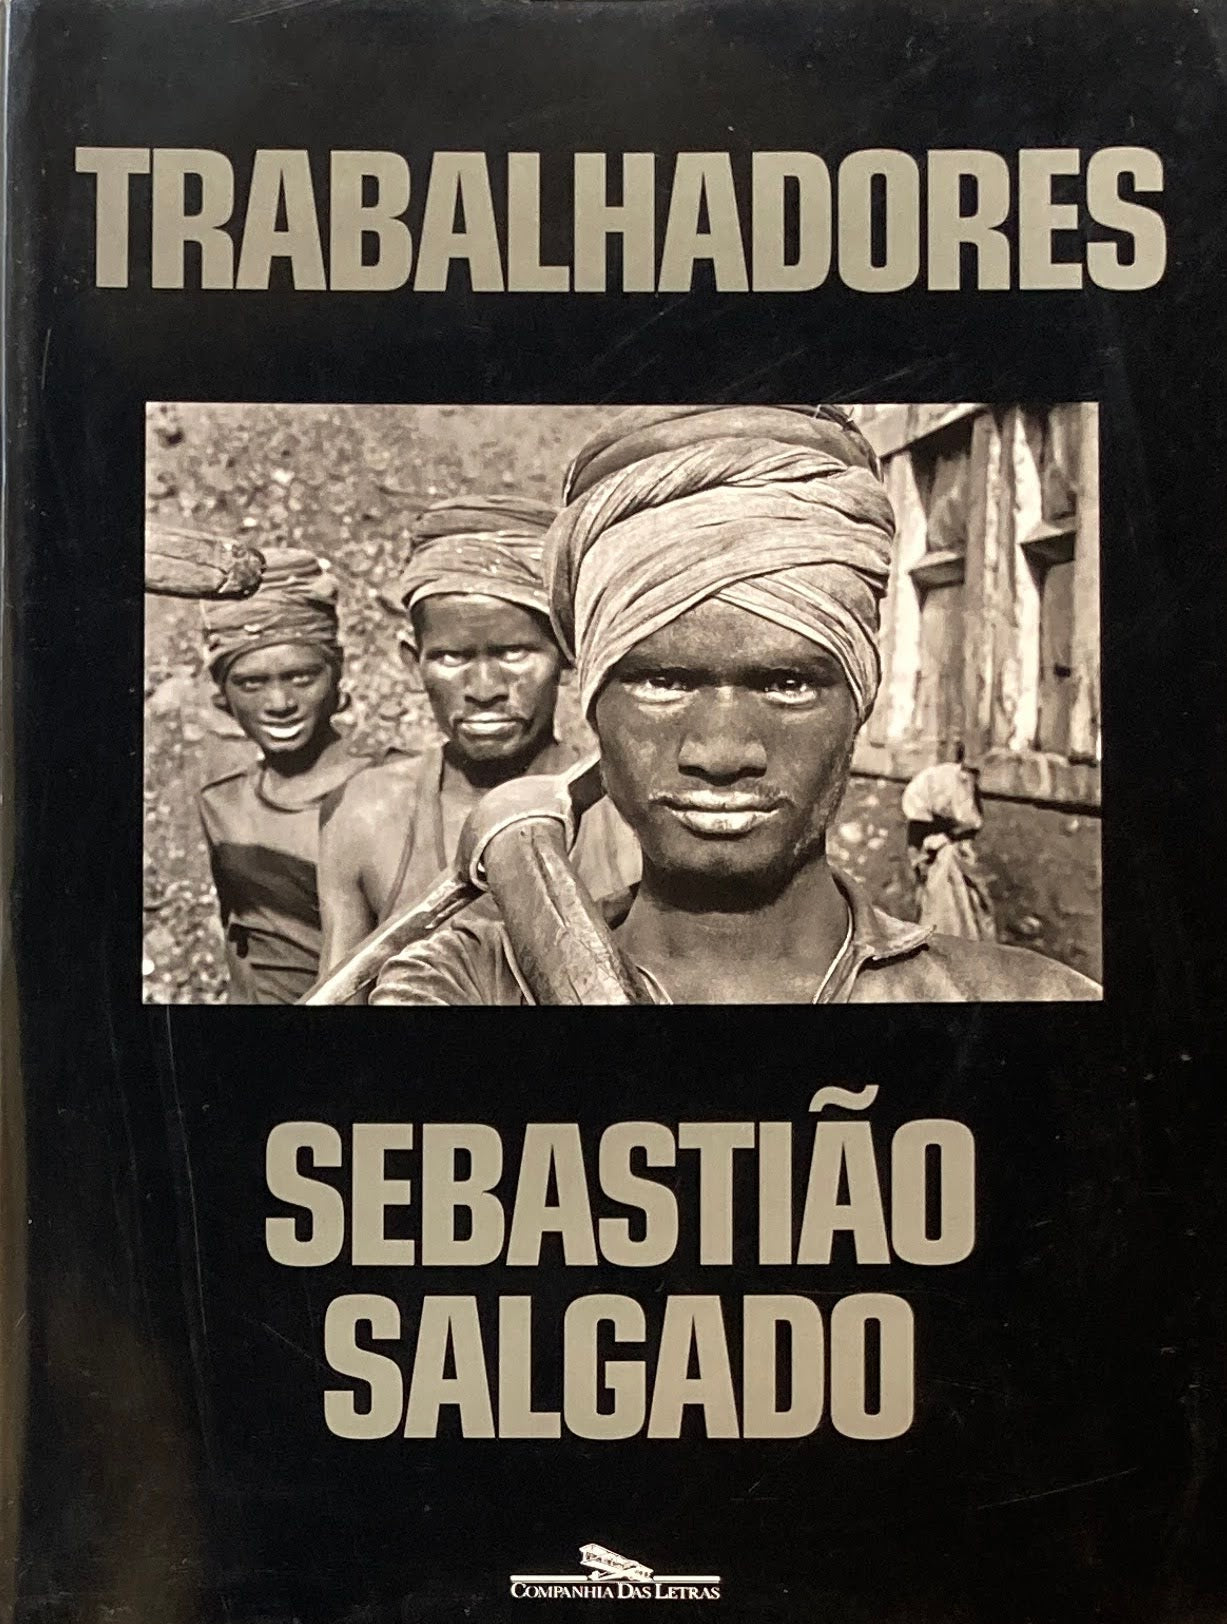 Trabalhadores SEBASTIAO SALGADO セバスチャン・サルガド写真集 